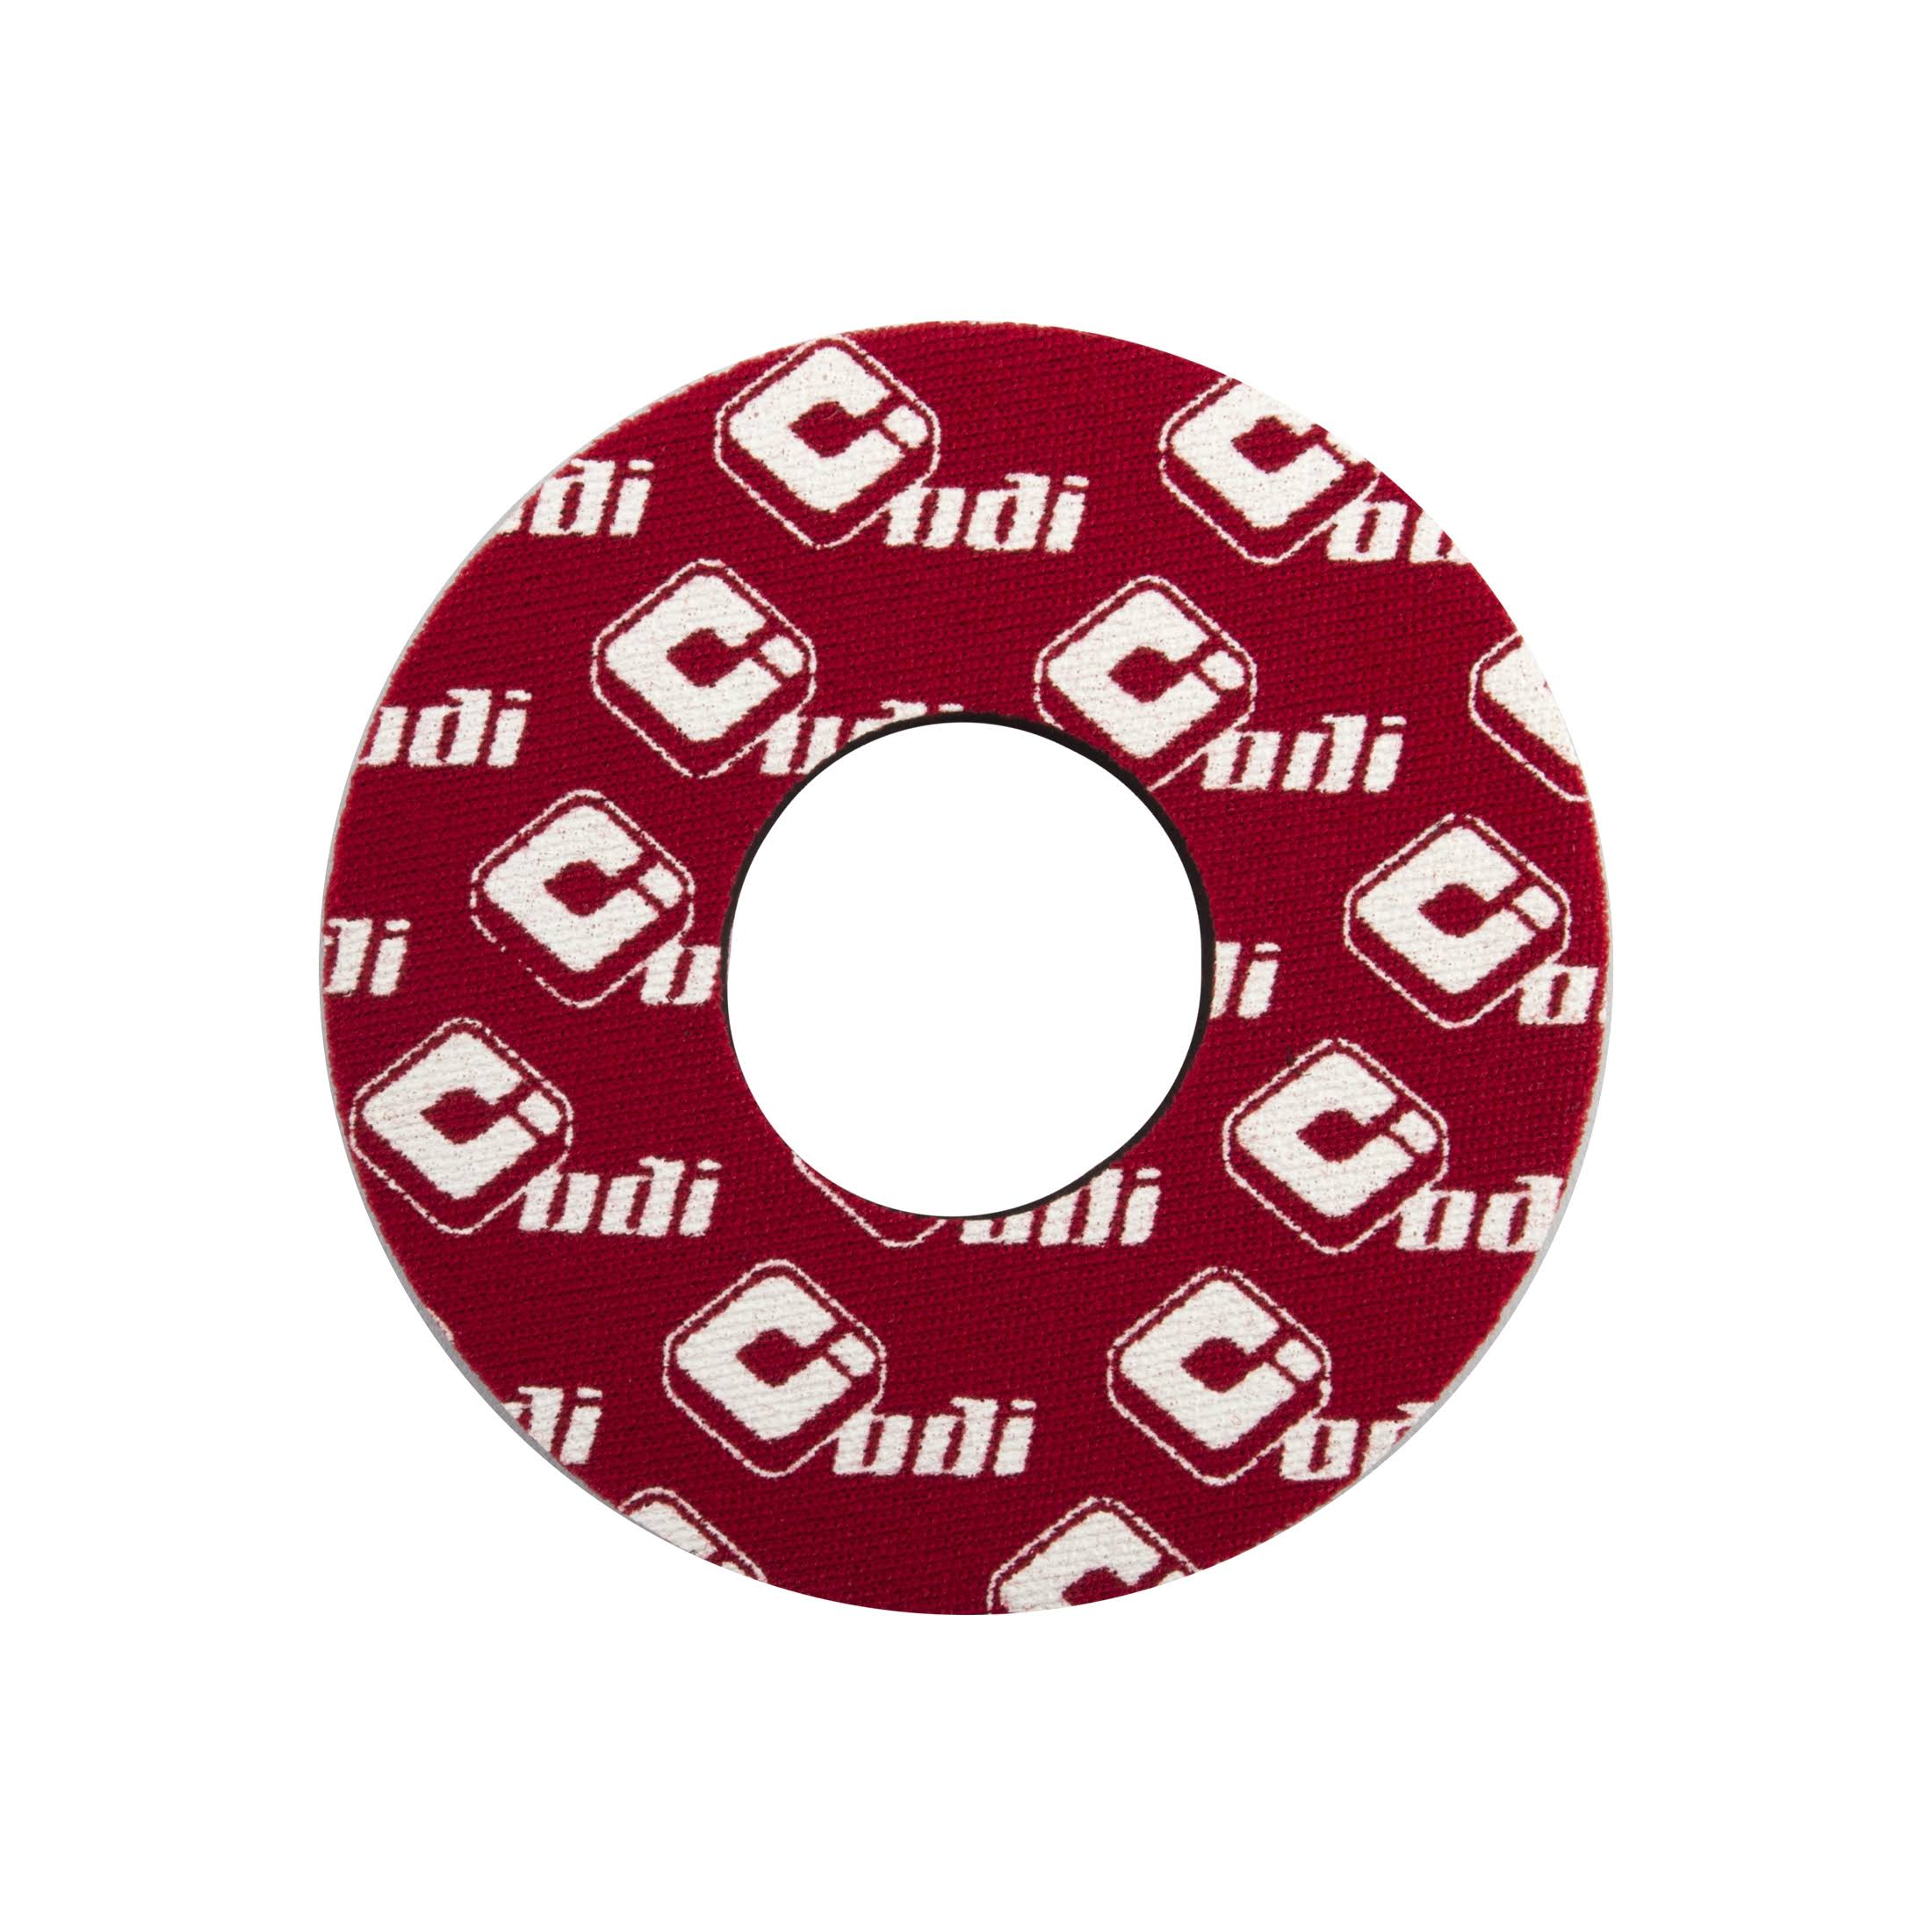 ODI Grip Donuts - Red